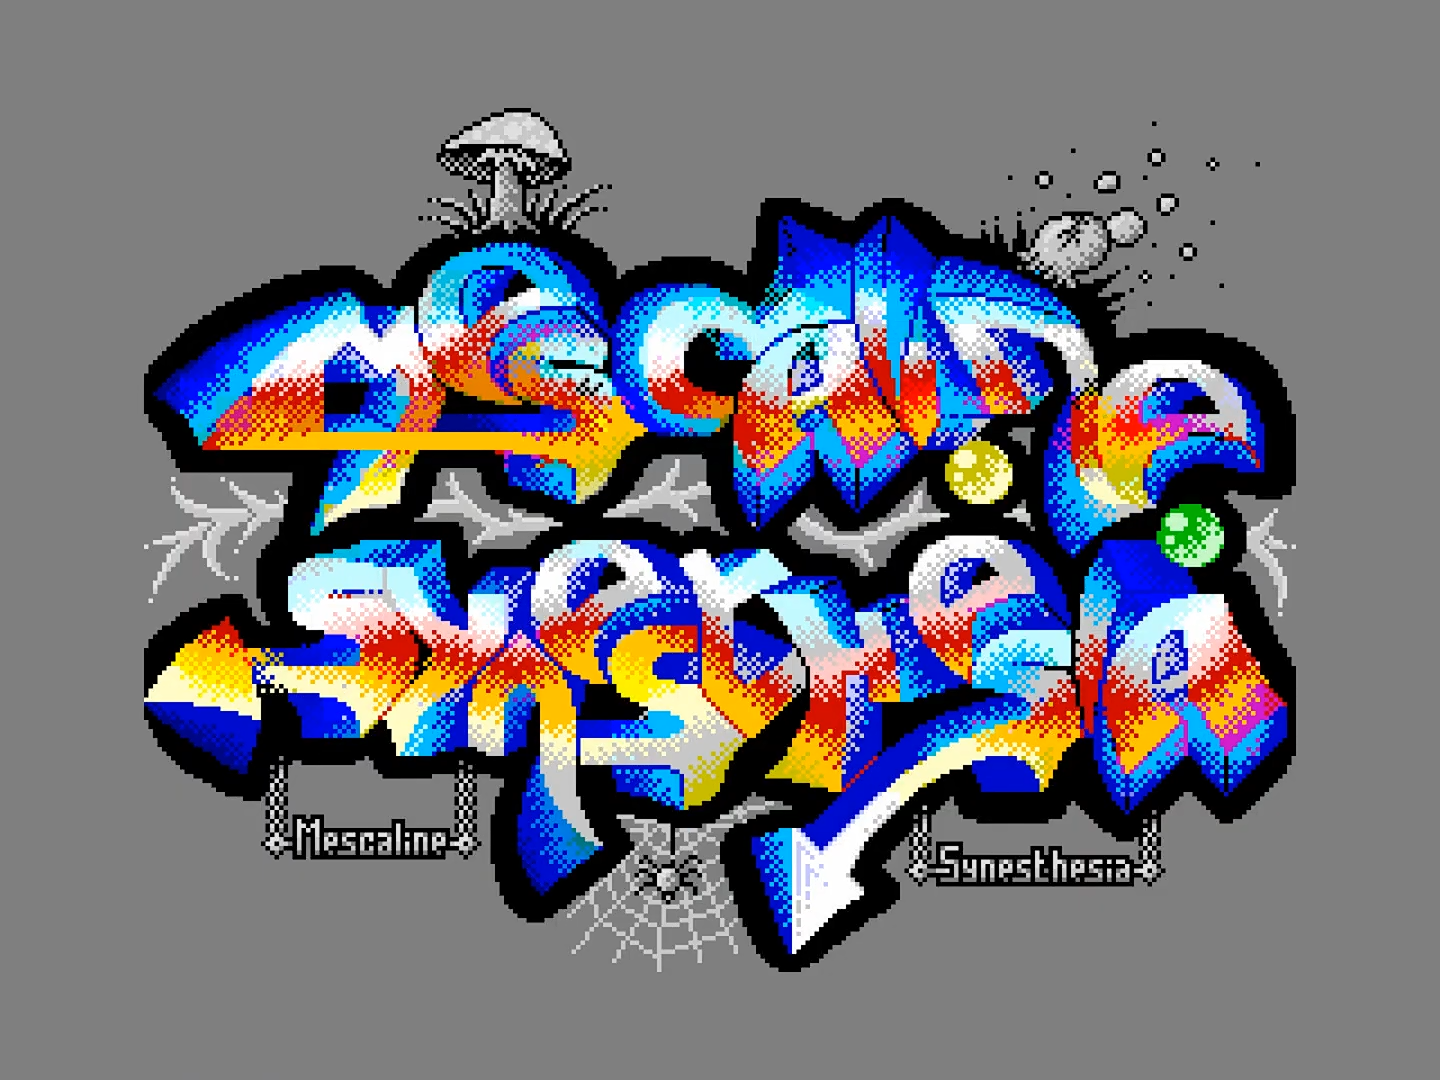 Mescaline Synesthesia image, screenshot or loading screen